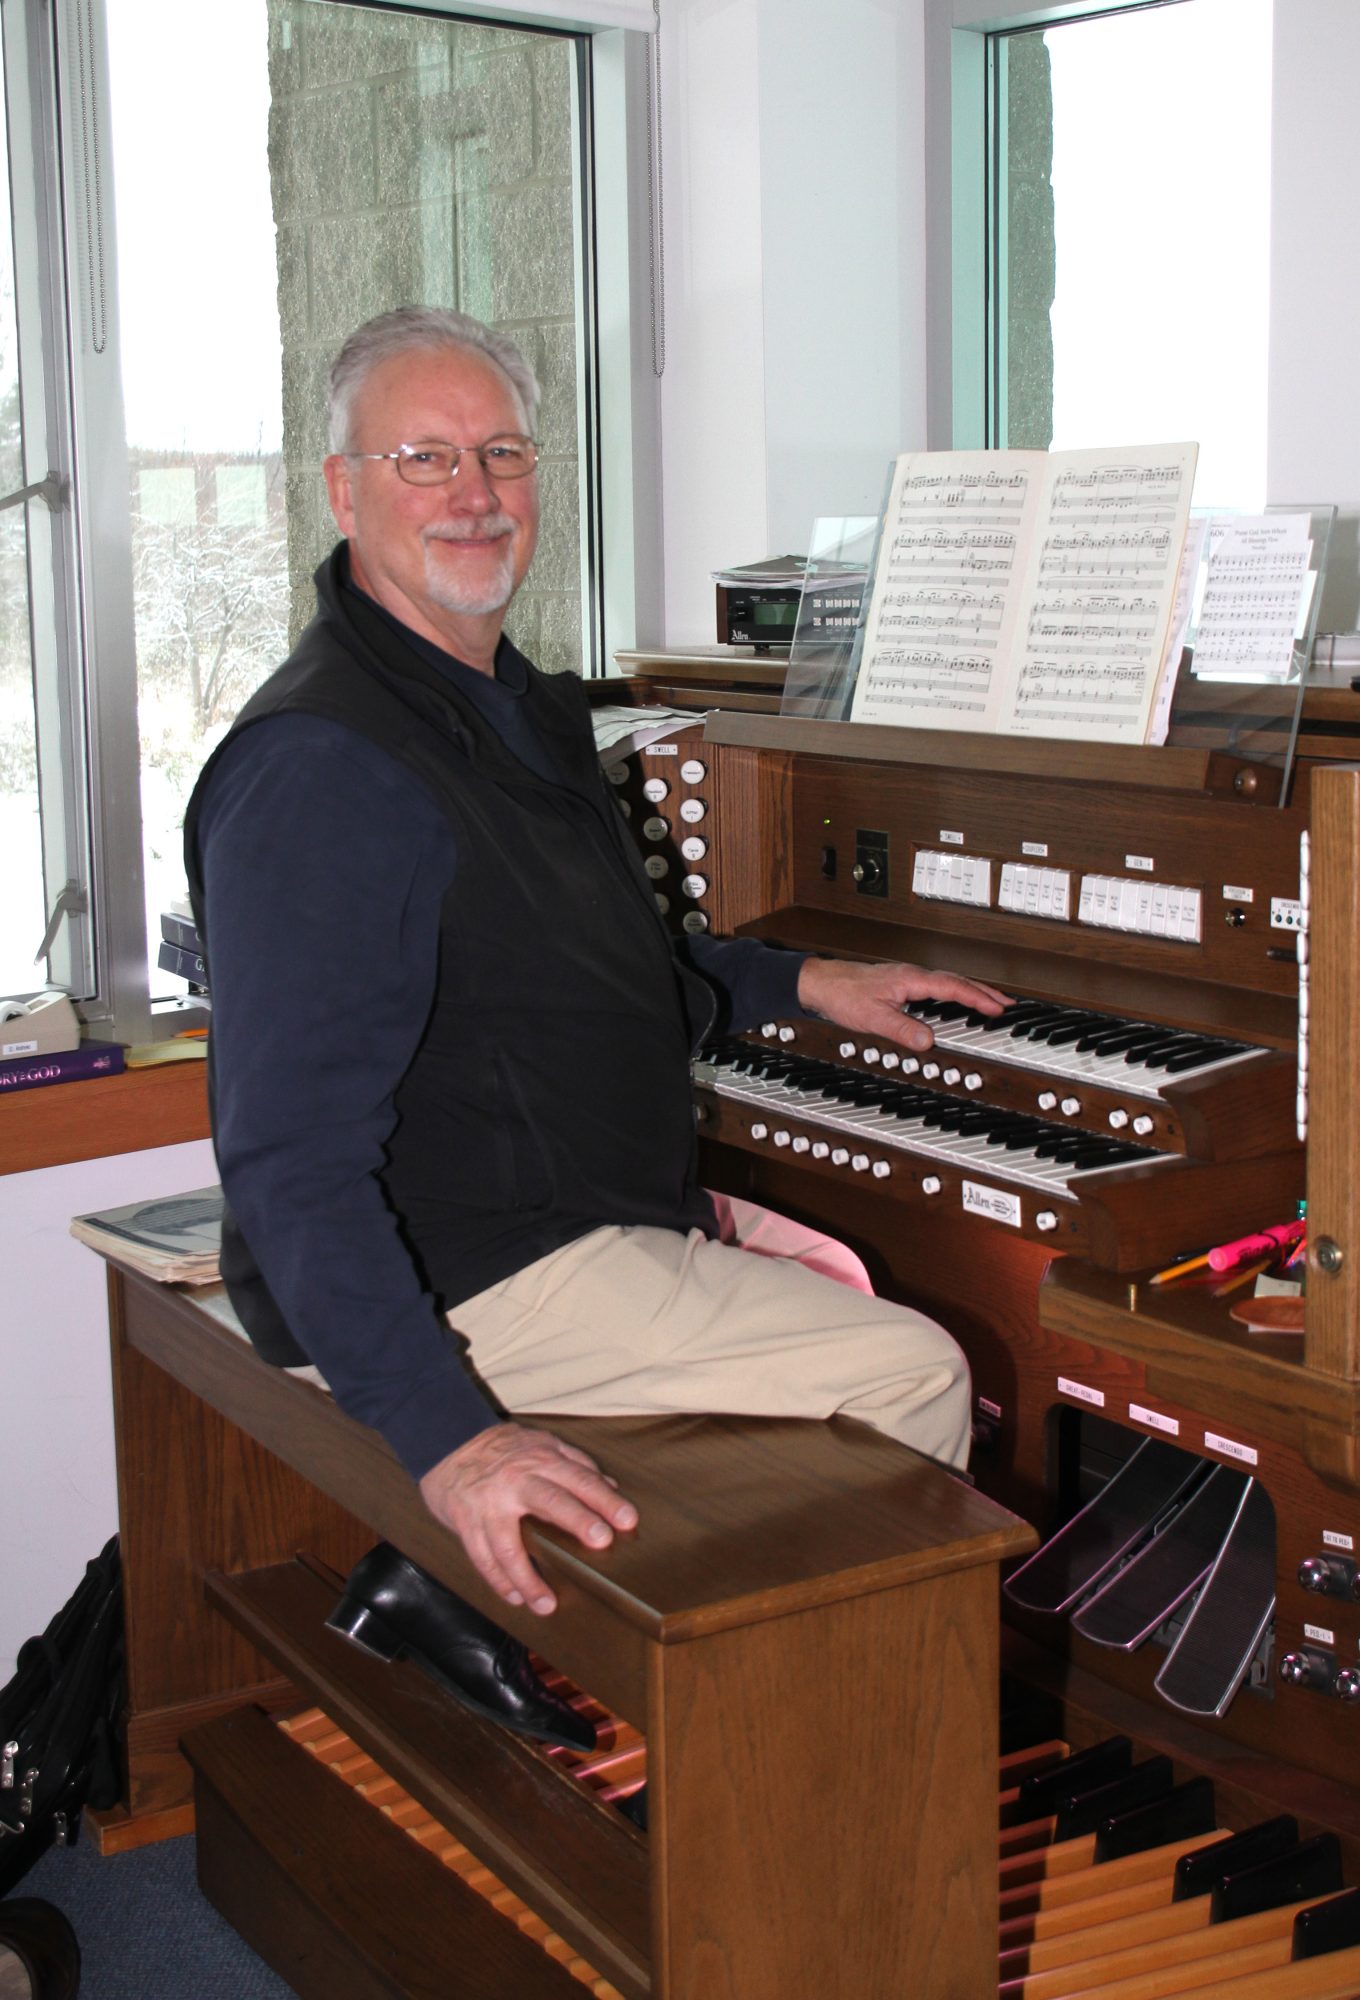 ST. ANDREWS PRESBYTERIAN CHURCH - Tim Quist, Organist